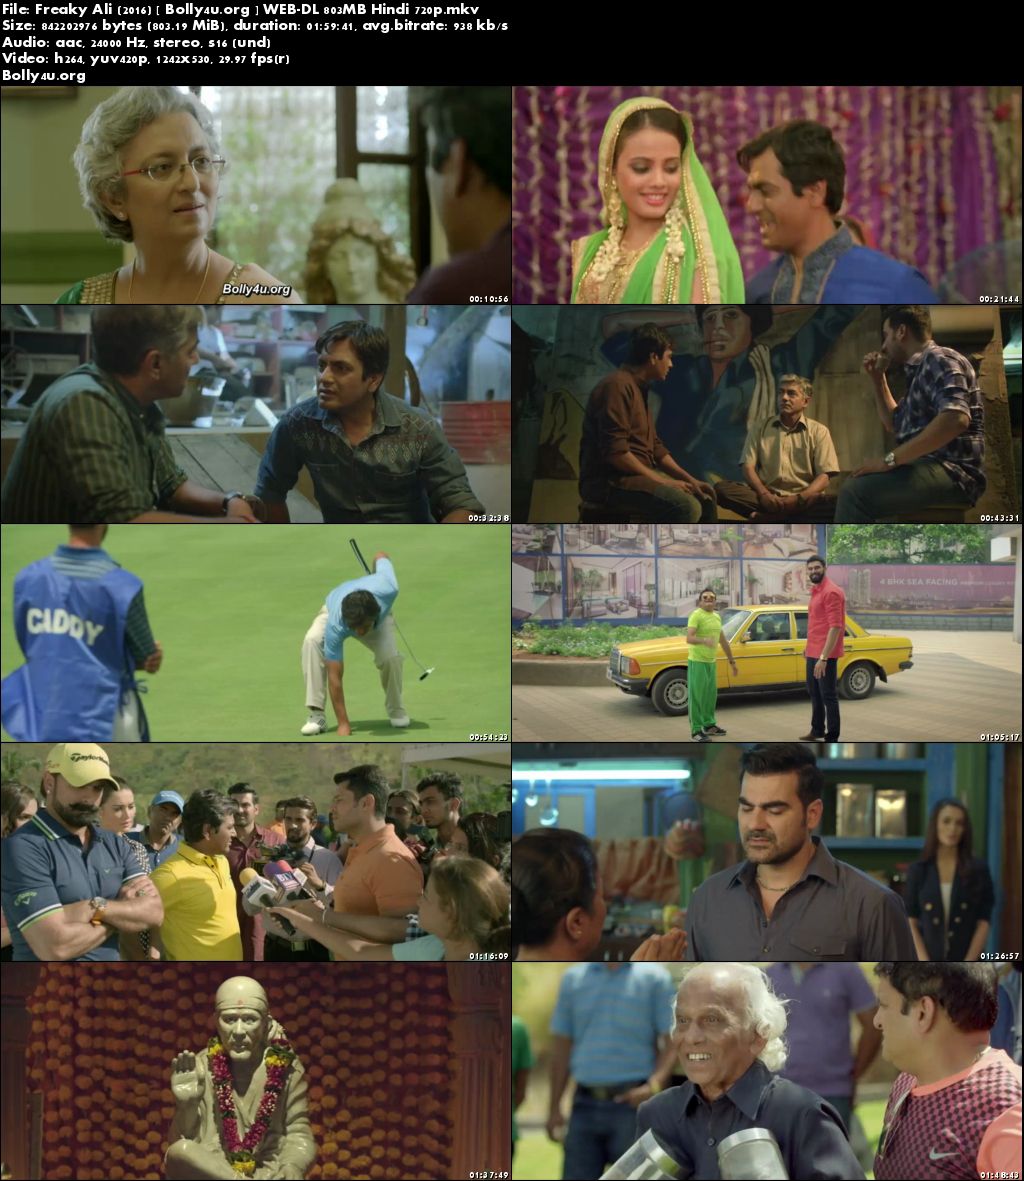 Freaky Ali 2016 WEB-DL 800MB Full Hindi Movie Download 720p